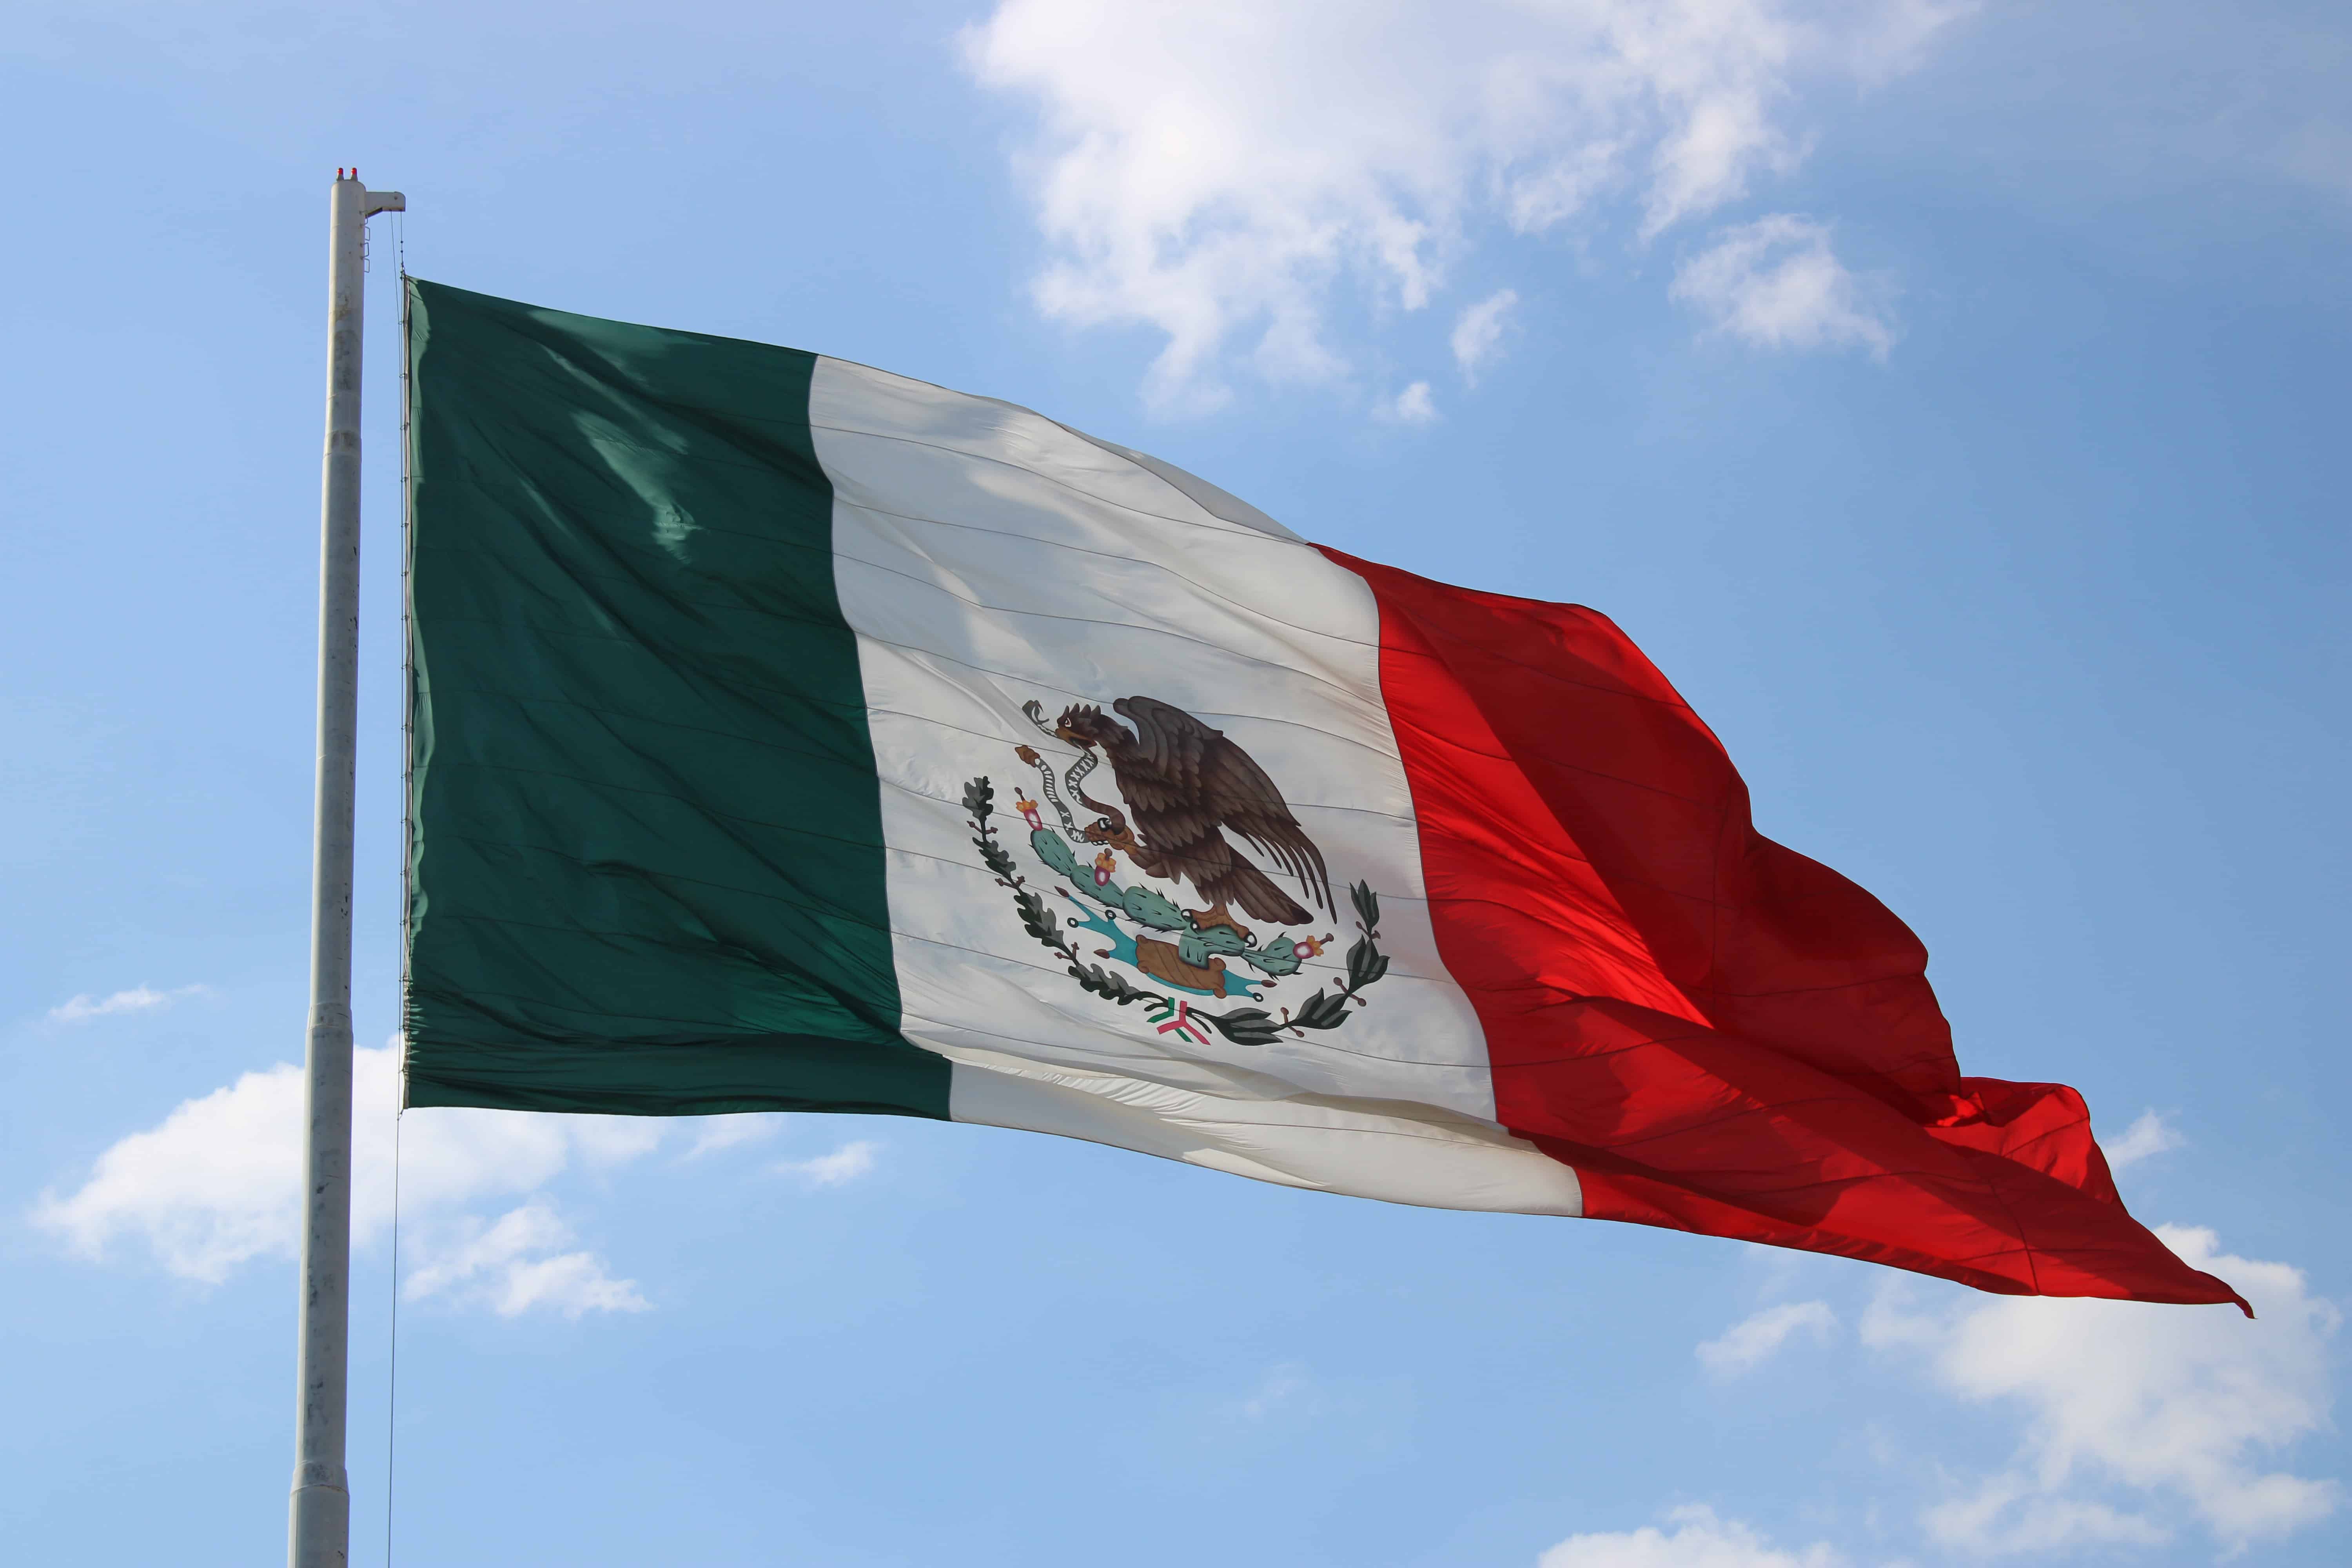 flag-of-mexico